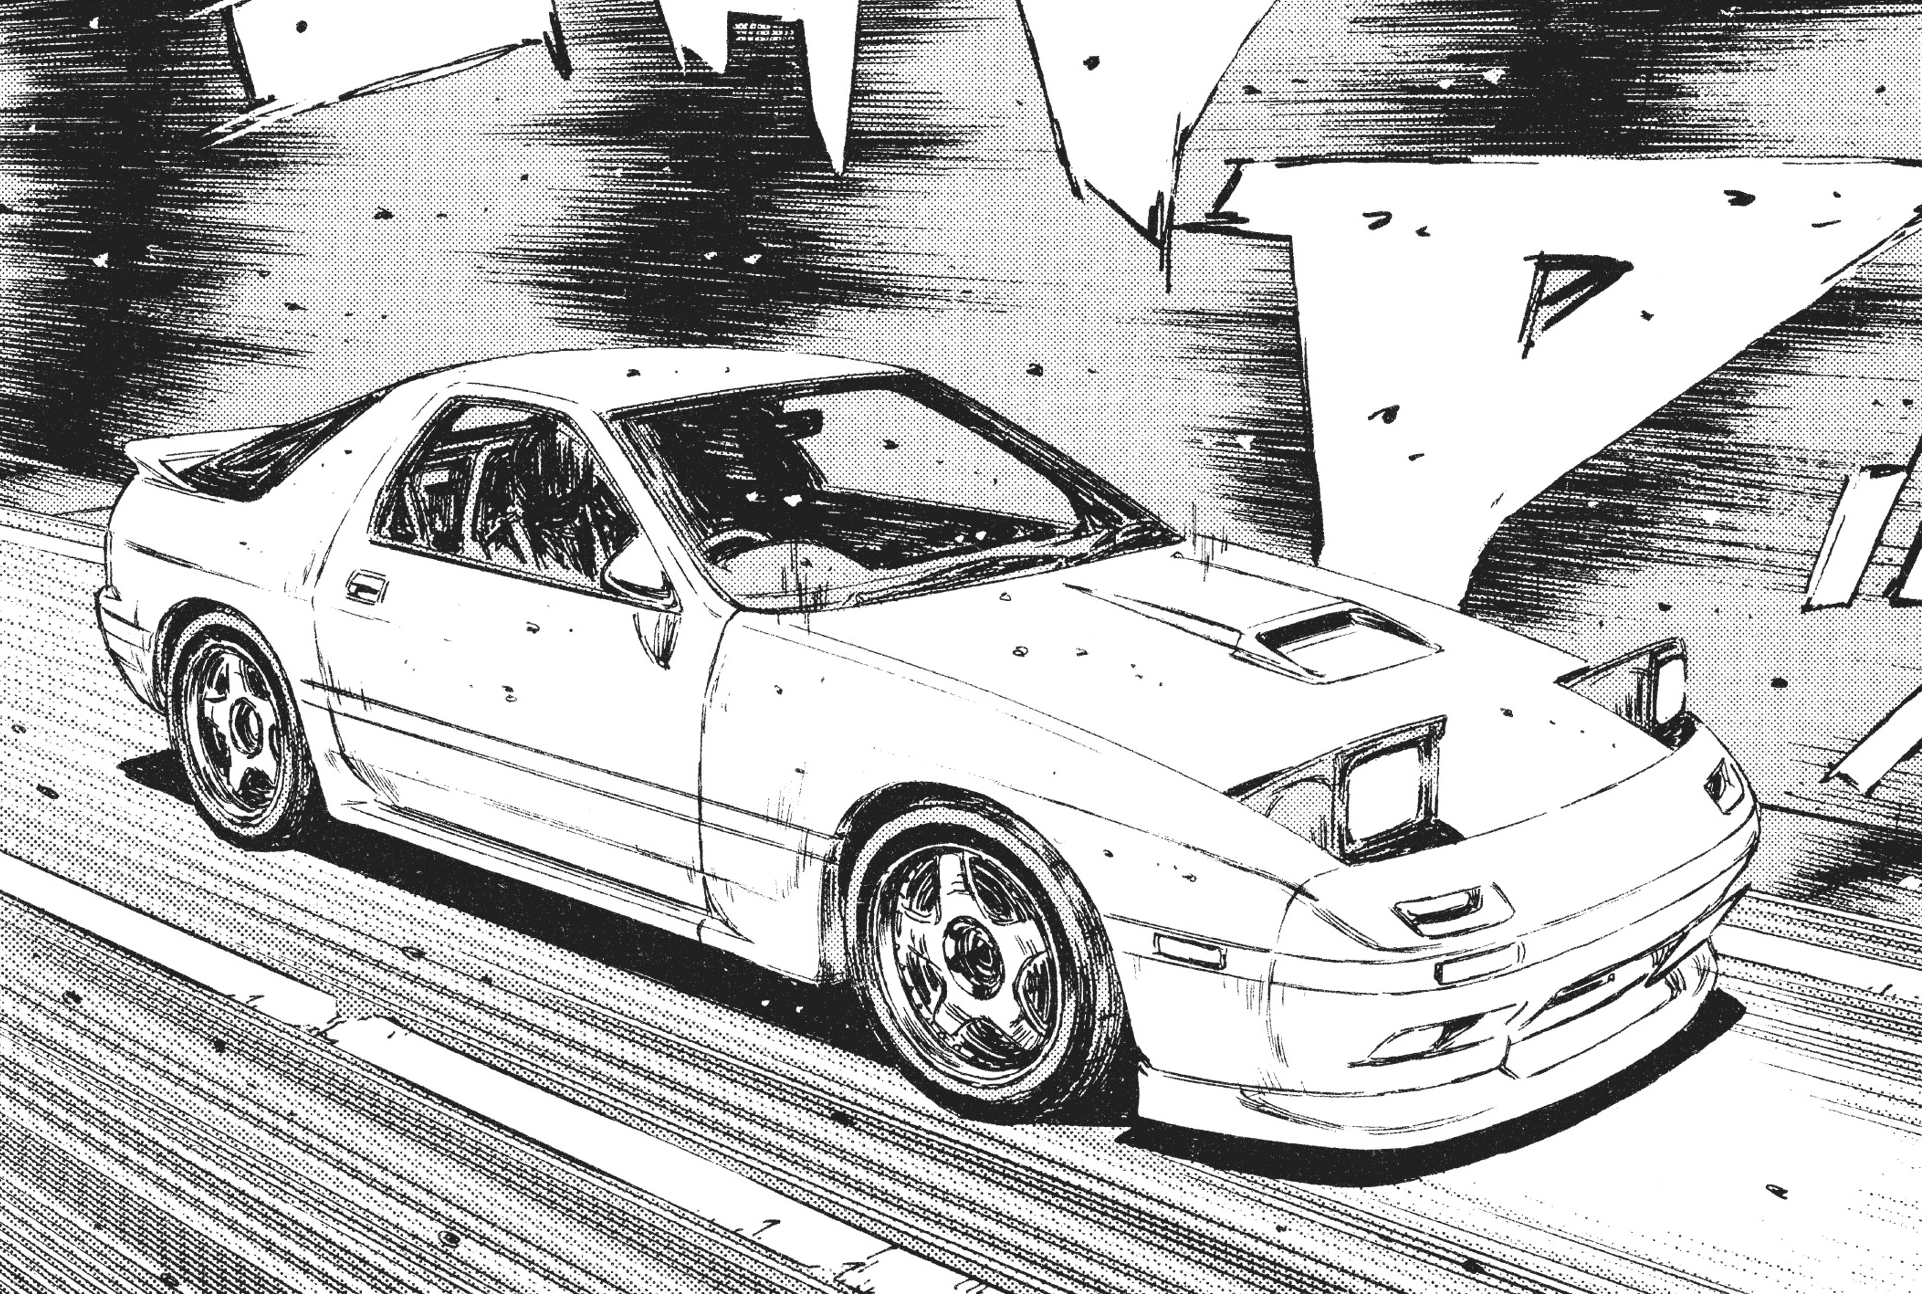 Ryosuke Takahashi's Mazda RX 7